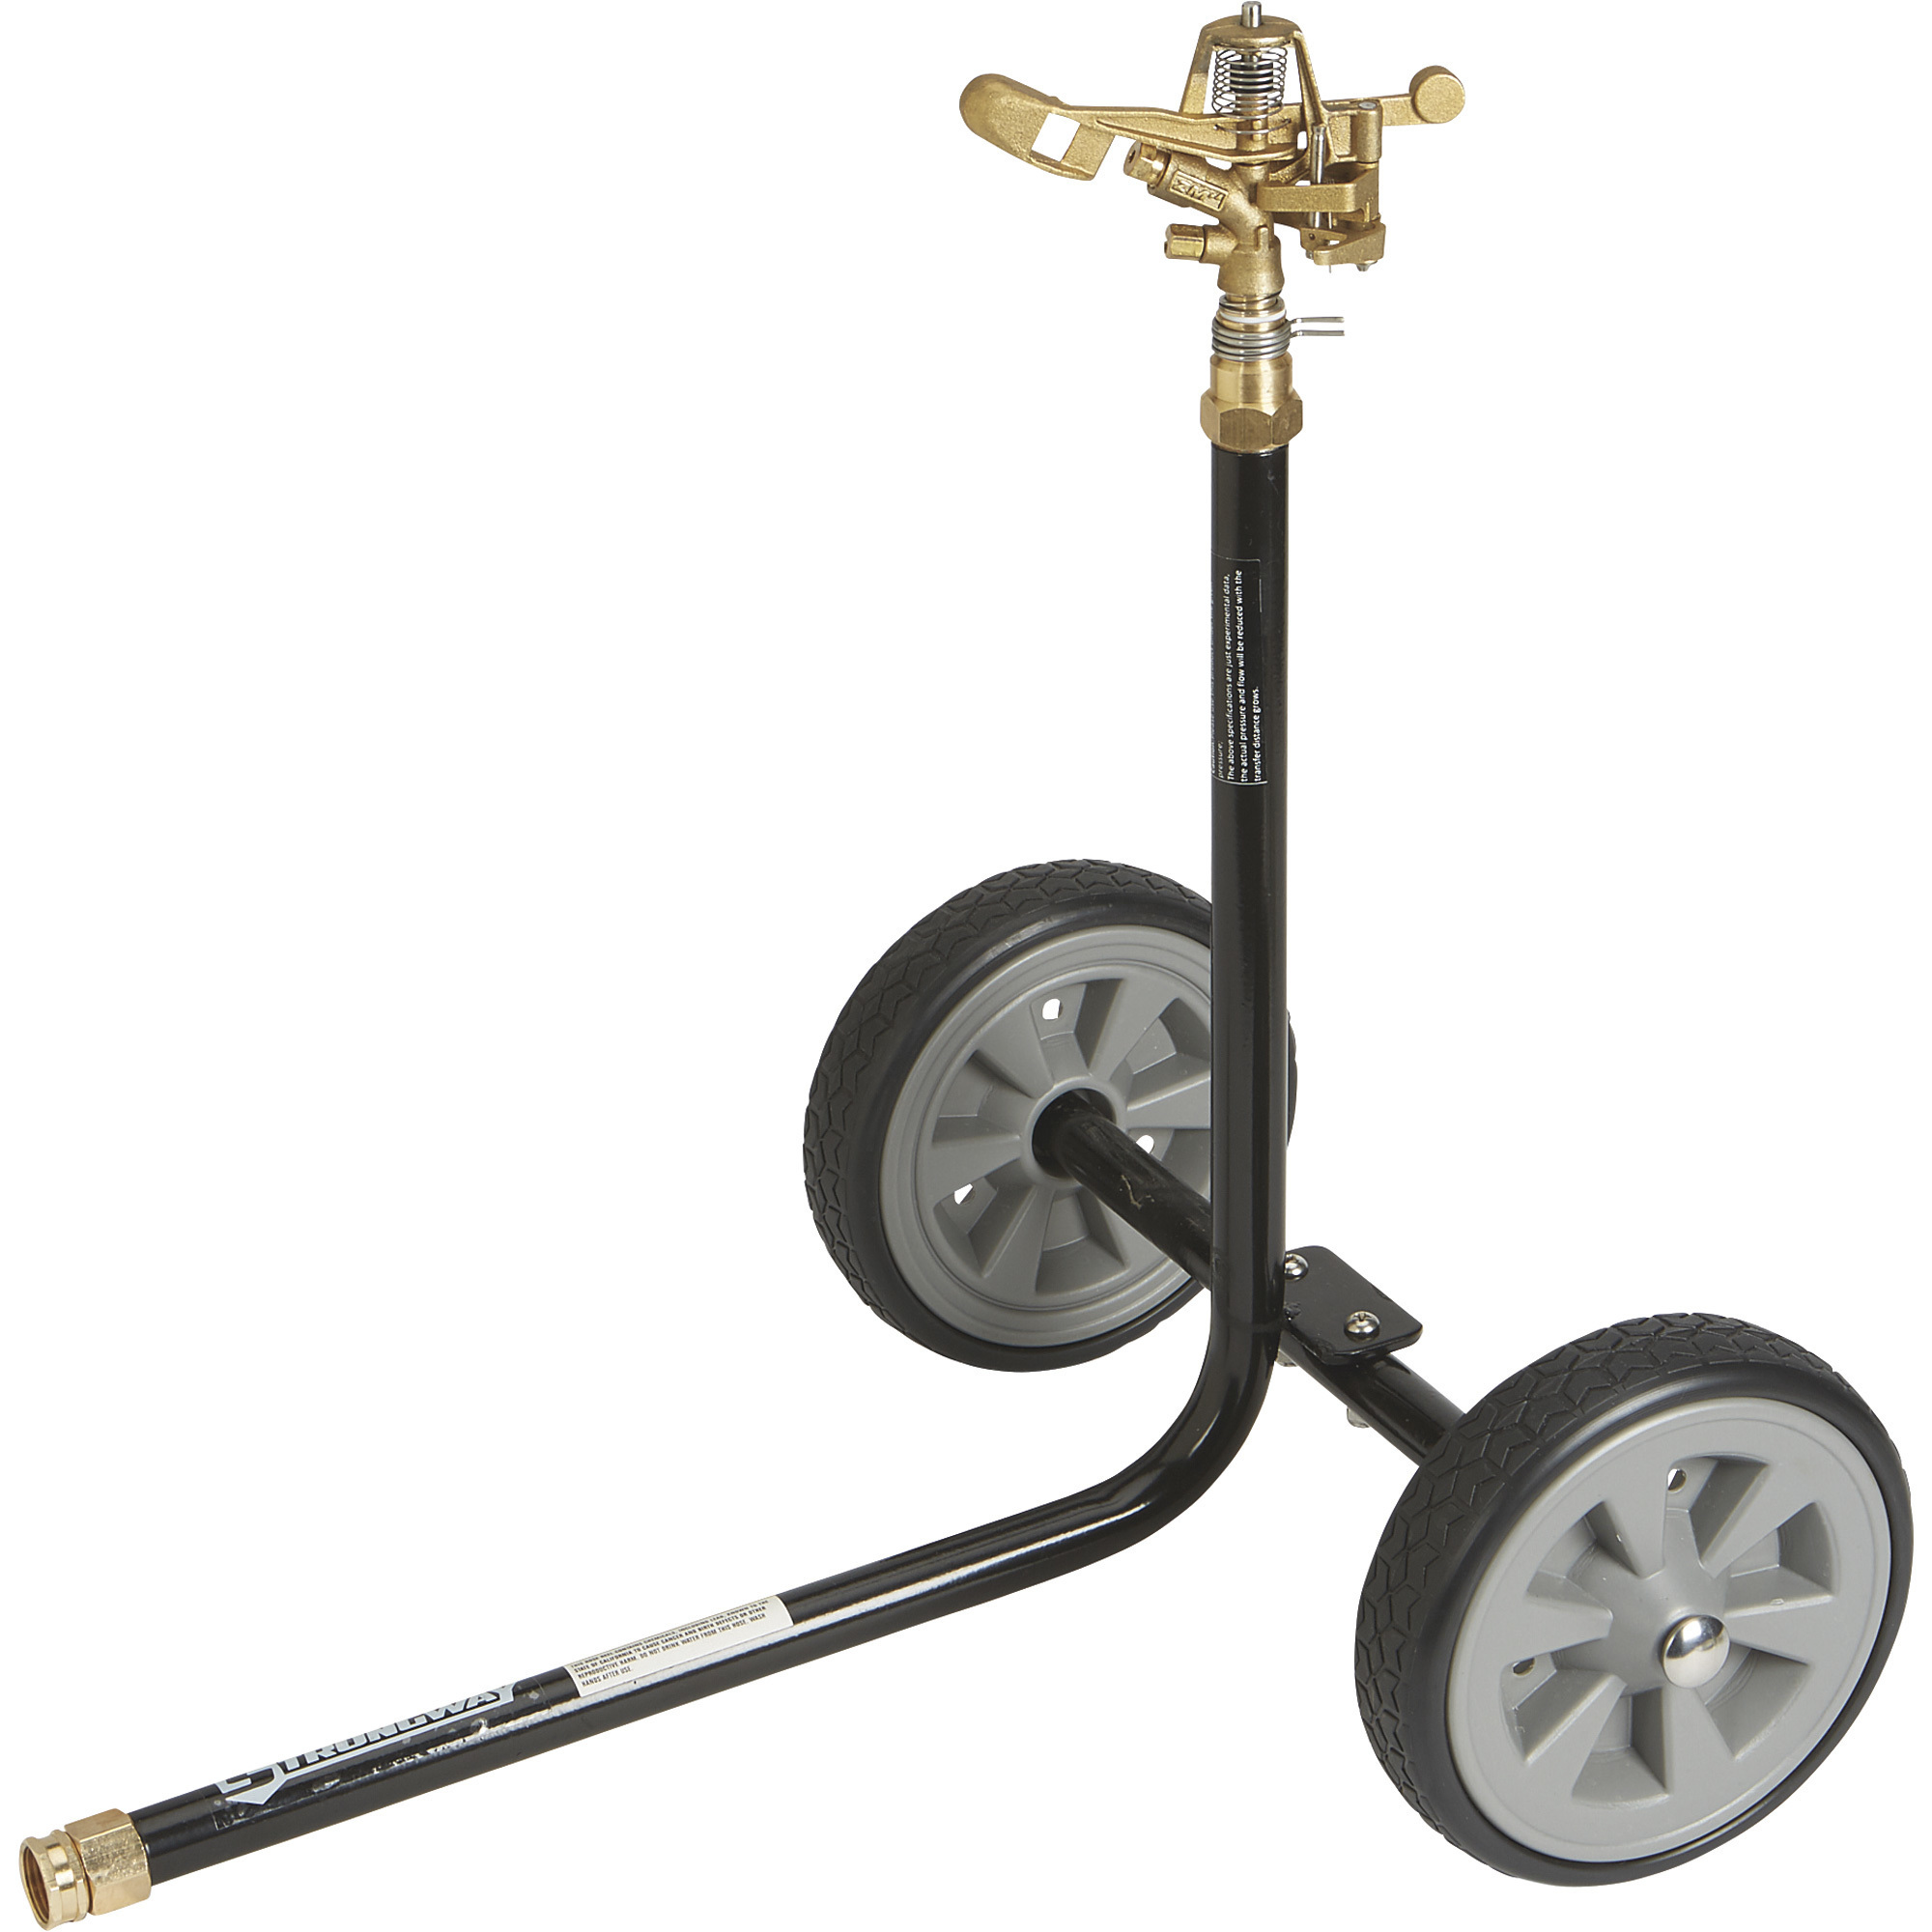 Strongway Wheeled Sprinkler, 3/4in. Brass Sprinkler Head with 2